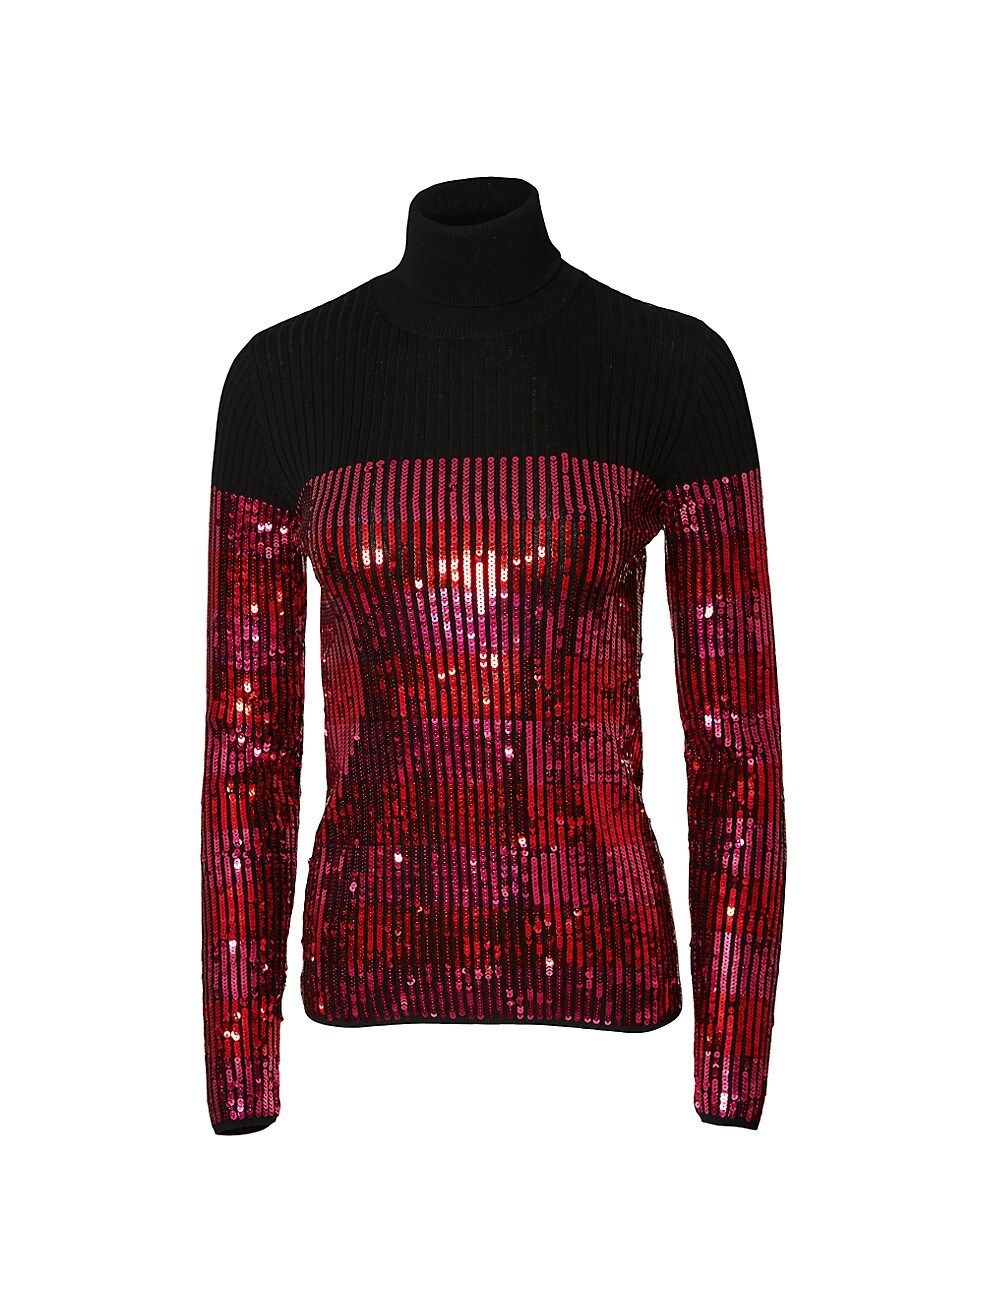 Carolina Herrera Metallic Turtleneck Sweater | Saks Fifth Avenue